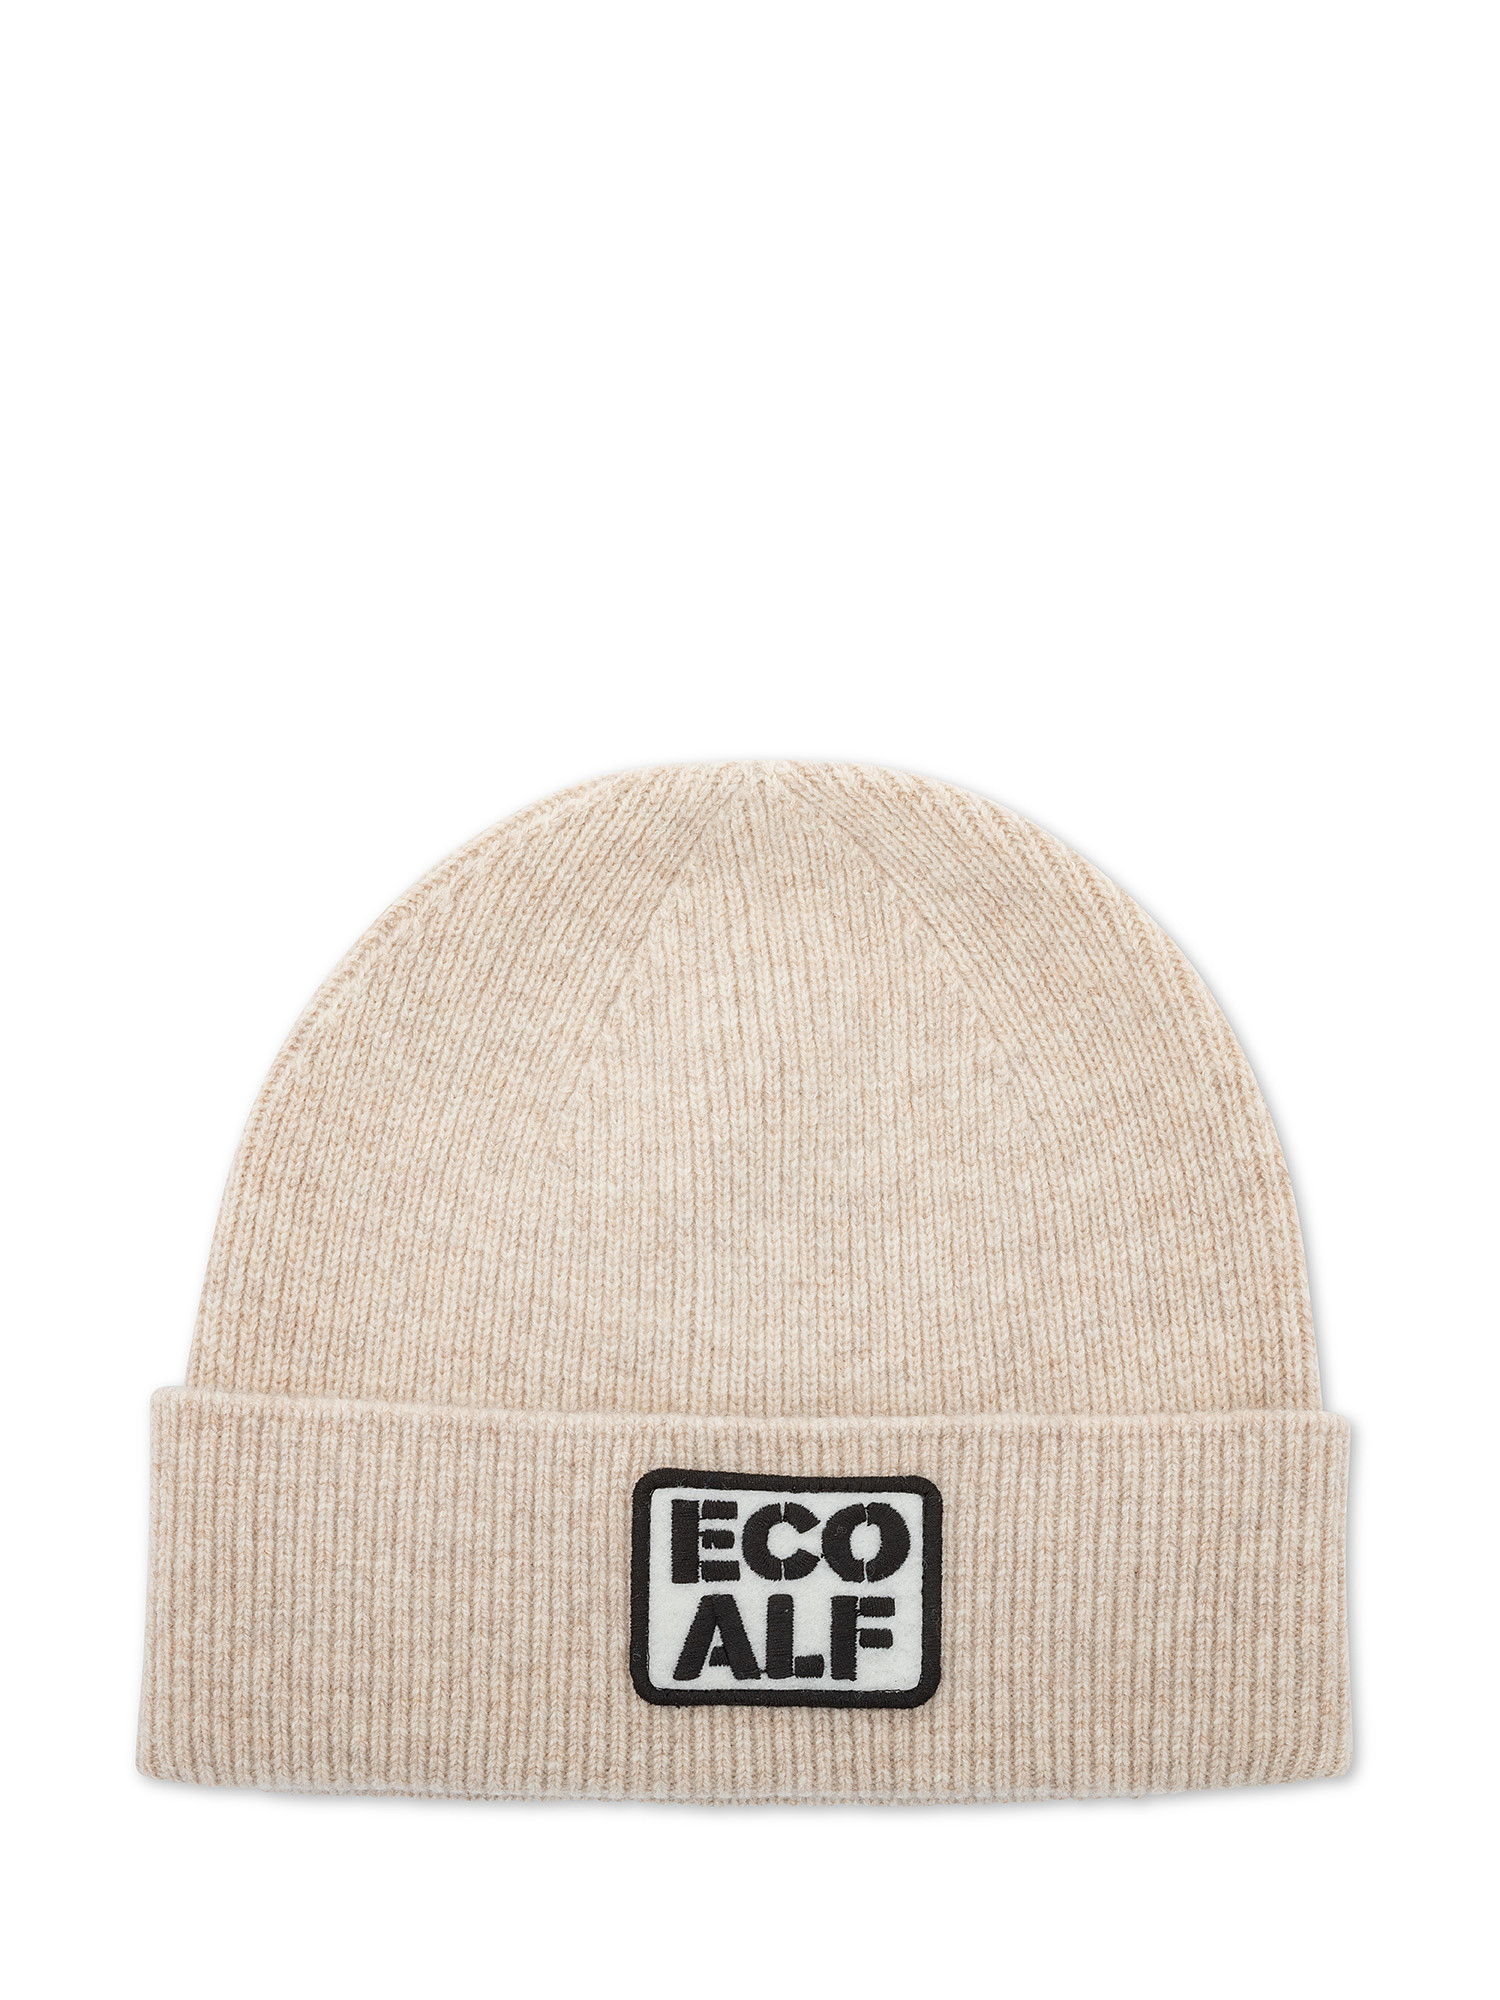 Ecoalf - Cappello con logo, Beige chiaro, large image number 0